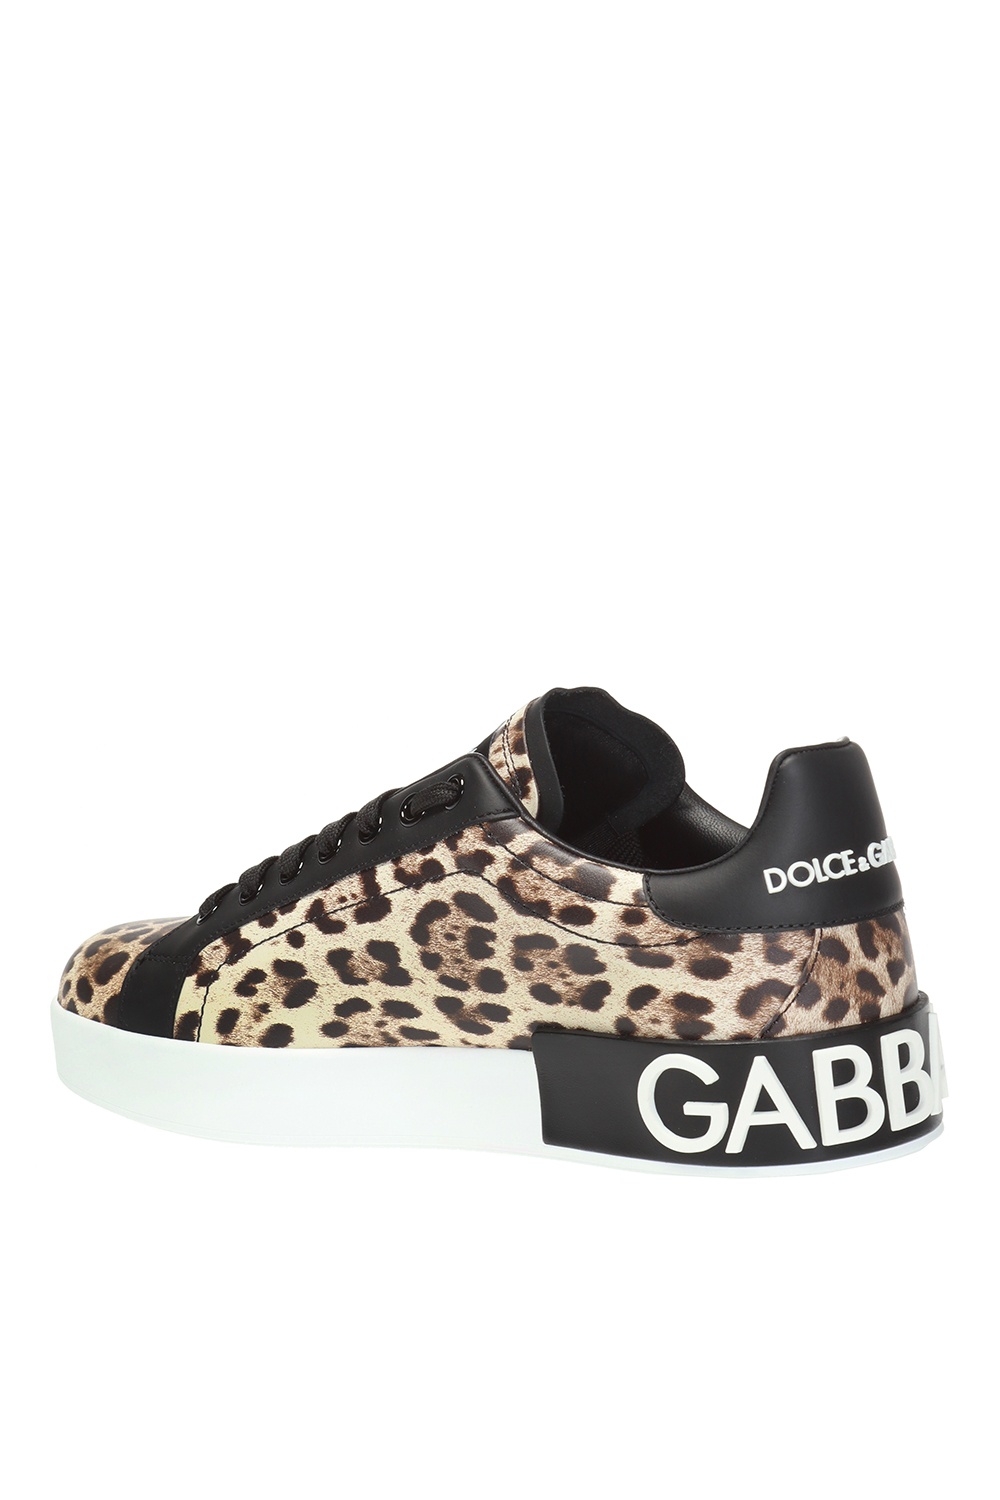 dolce gabbana shoes leopard